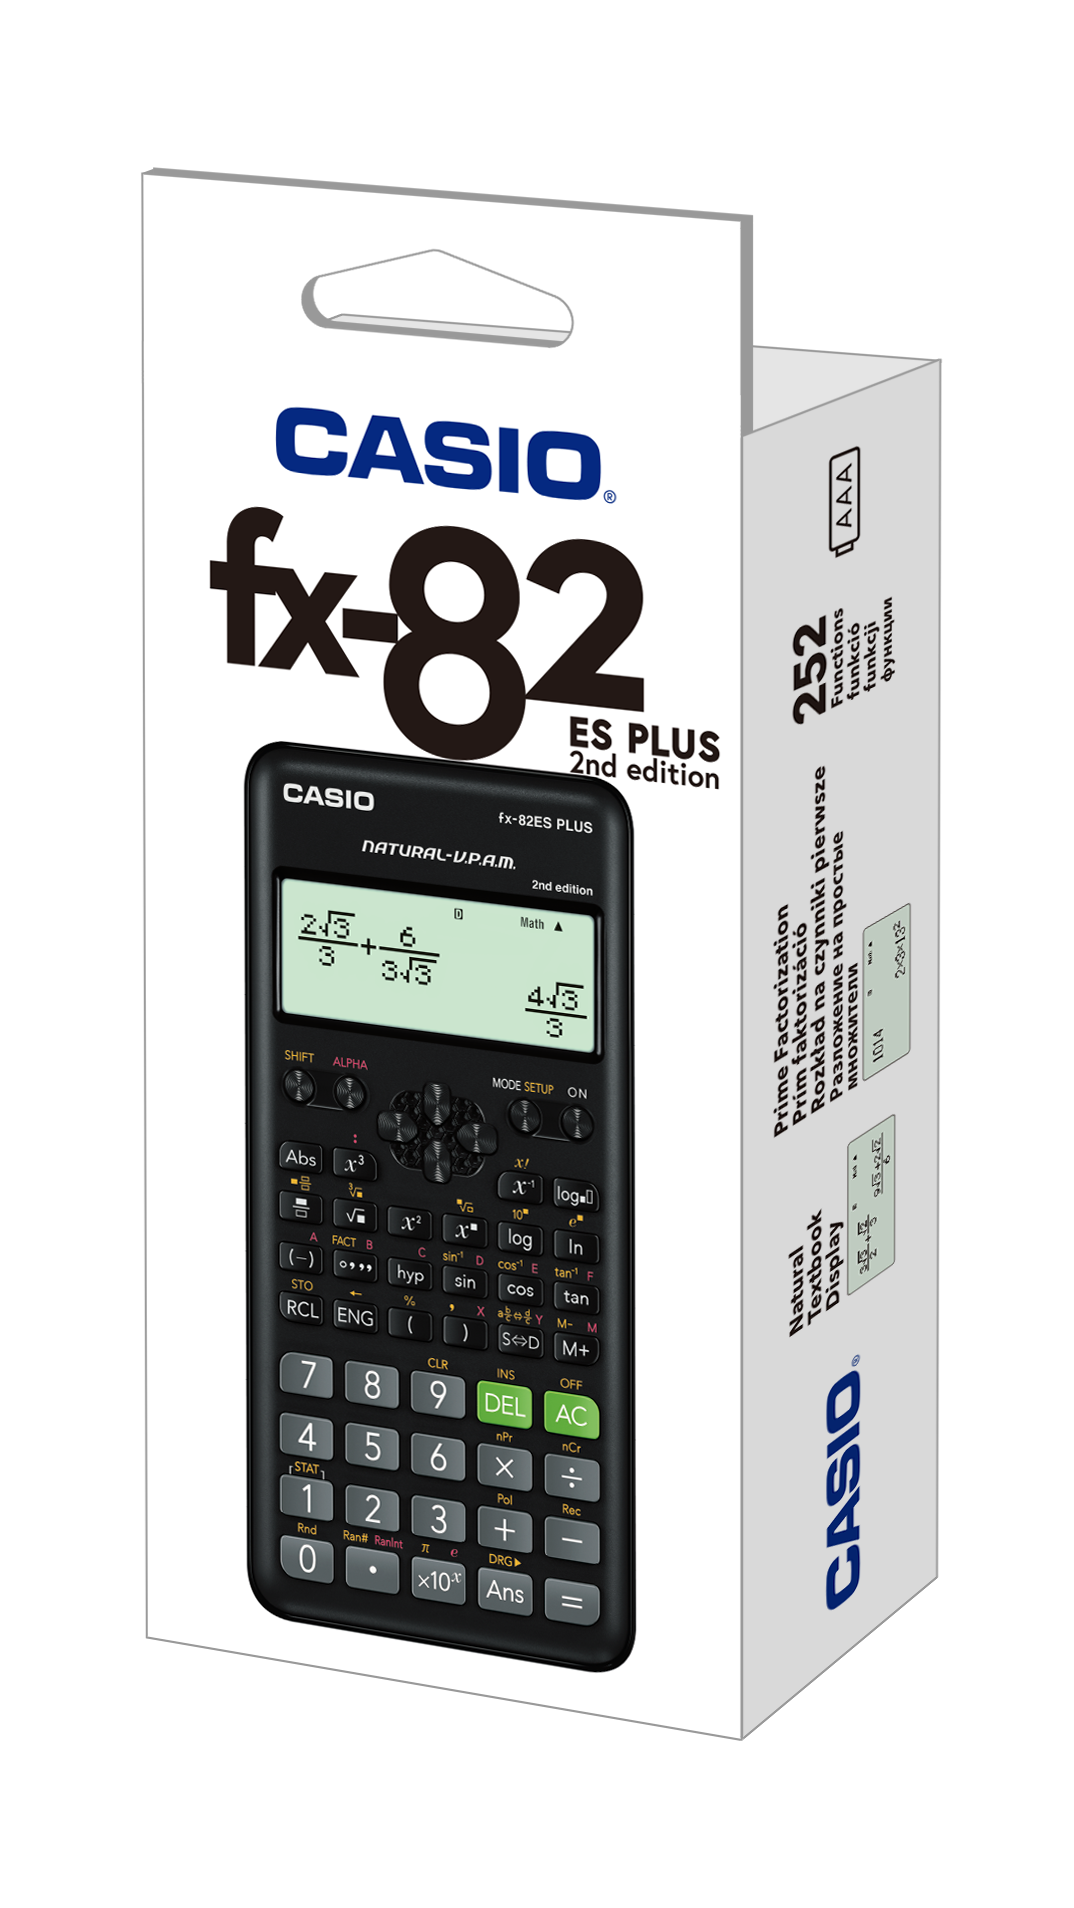 CASIO calculator (b) FX-82ES PLUS-2 - 252 F